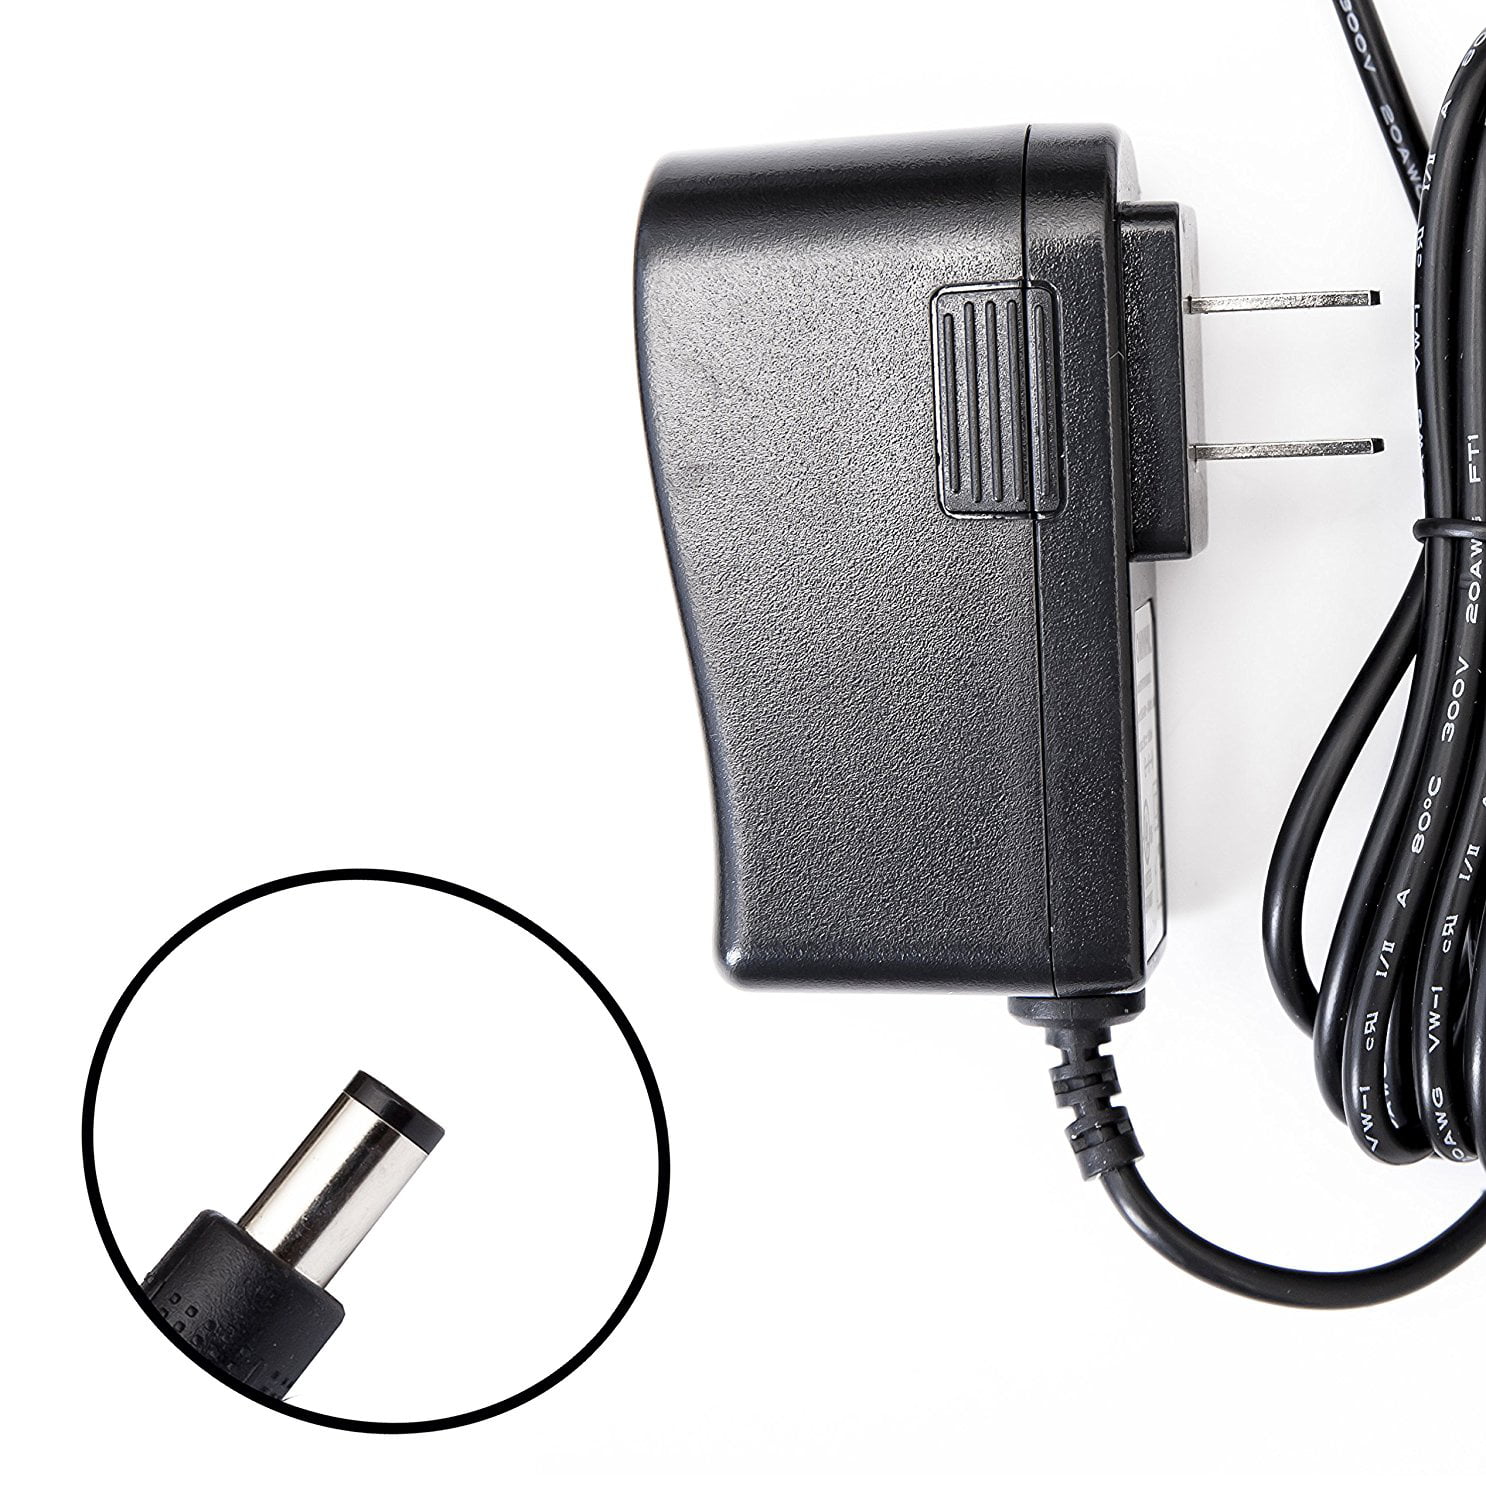 9 Volt 0.6 Power Adapter, AC to DC, 2.1mm X 5.5mm Plug, Regulated UL 9v 600mA Power Supply Wall Plug - Walmart.com